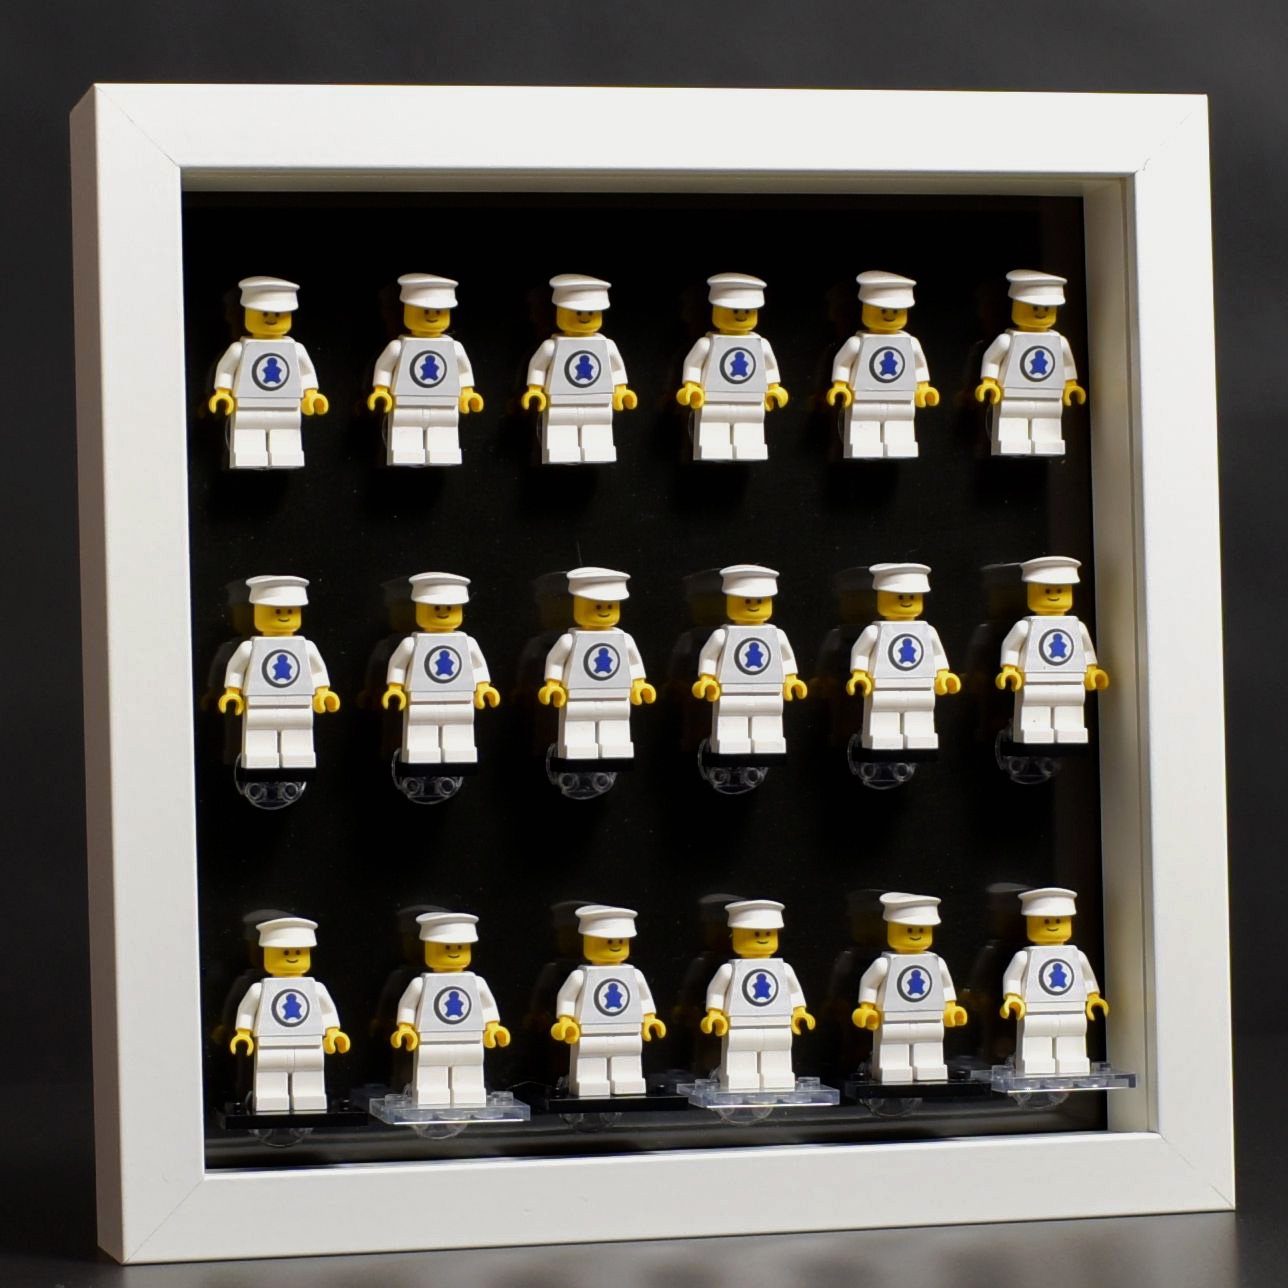 Serrado Frugal Giro de vuelta 9er Inlay depositor for IKEA RIBBA frame 23 x 23 designed for LEGO®  minifigures slot for 9 Figures 02015 - Markenwelt Voegele